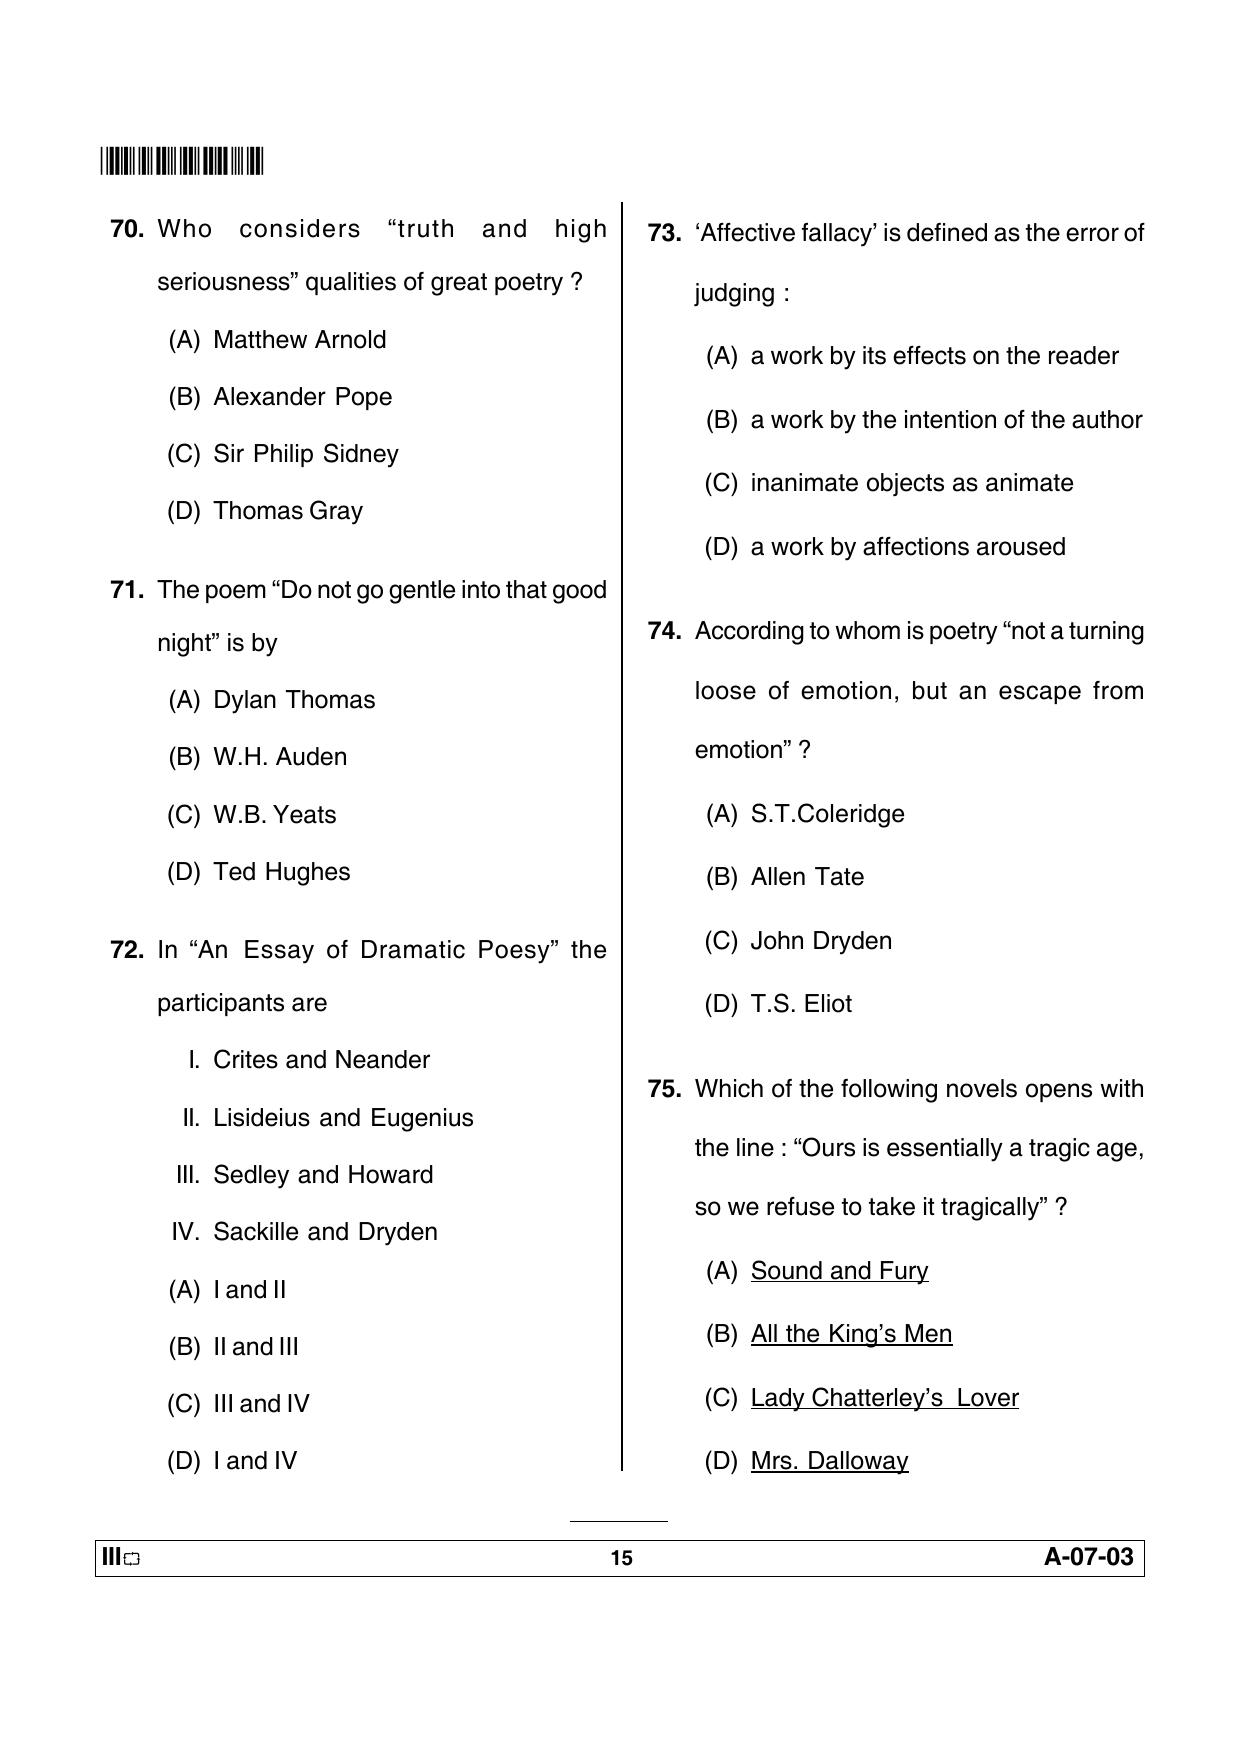 APSET English Previous Paper PDF - Page 15